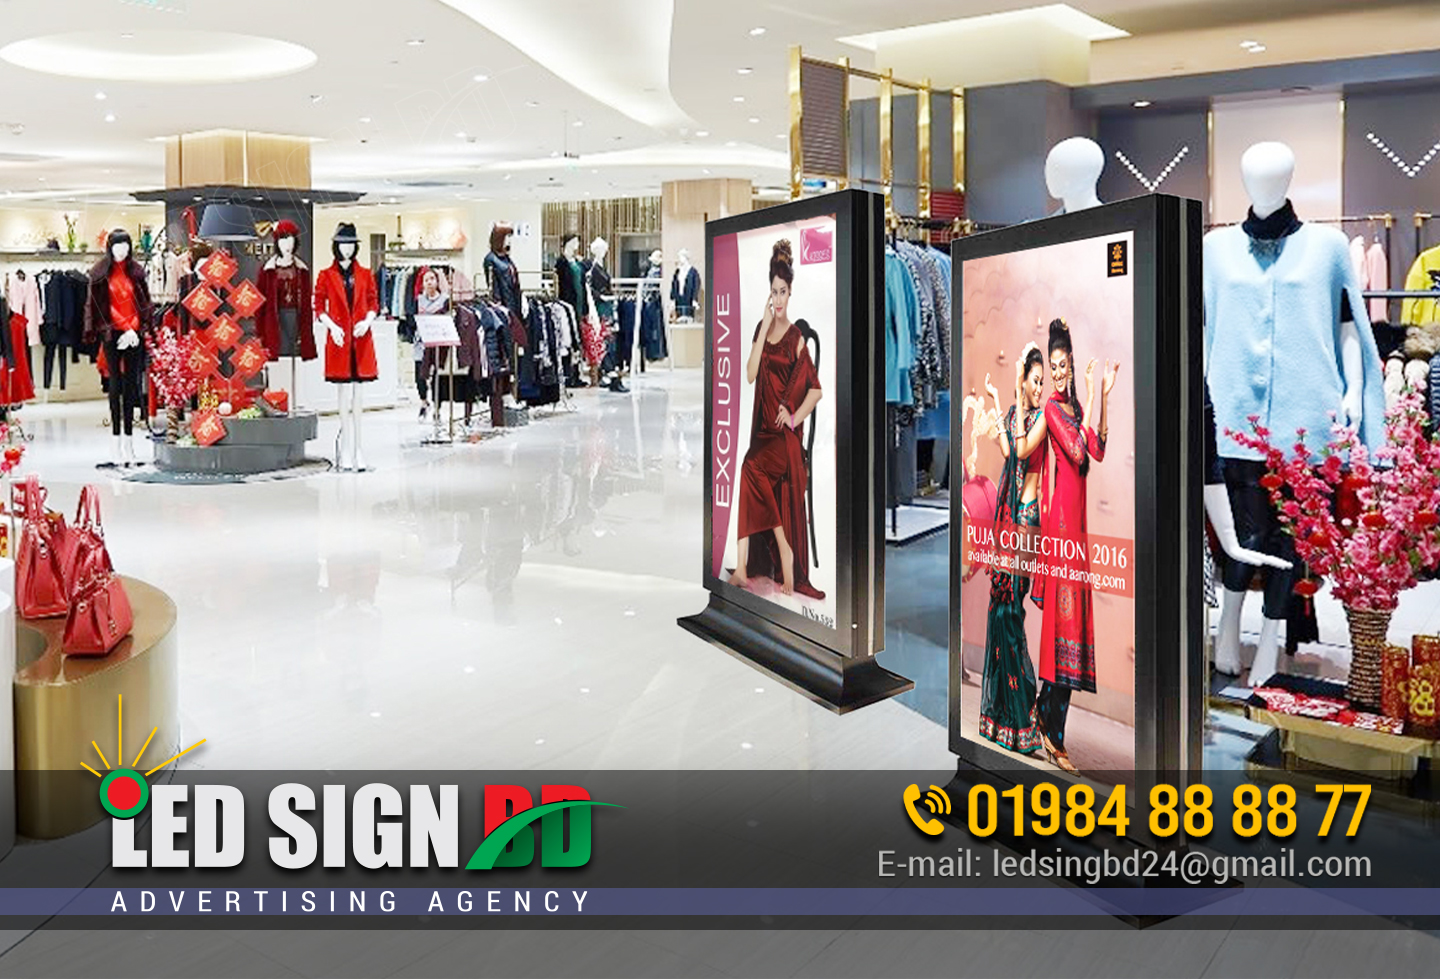 Stand Advertising Led Display Signage provider in Dhaka Bangladesh, Moving Display Signage in Dhaka Bangladesh.